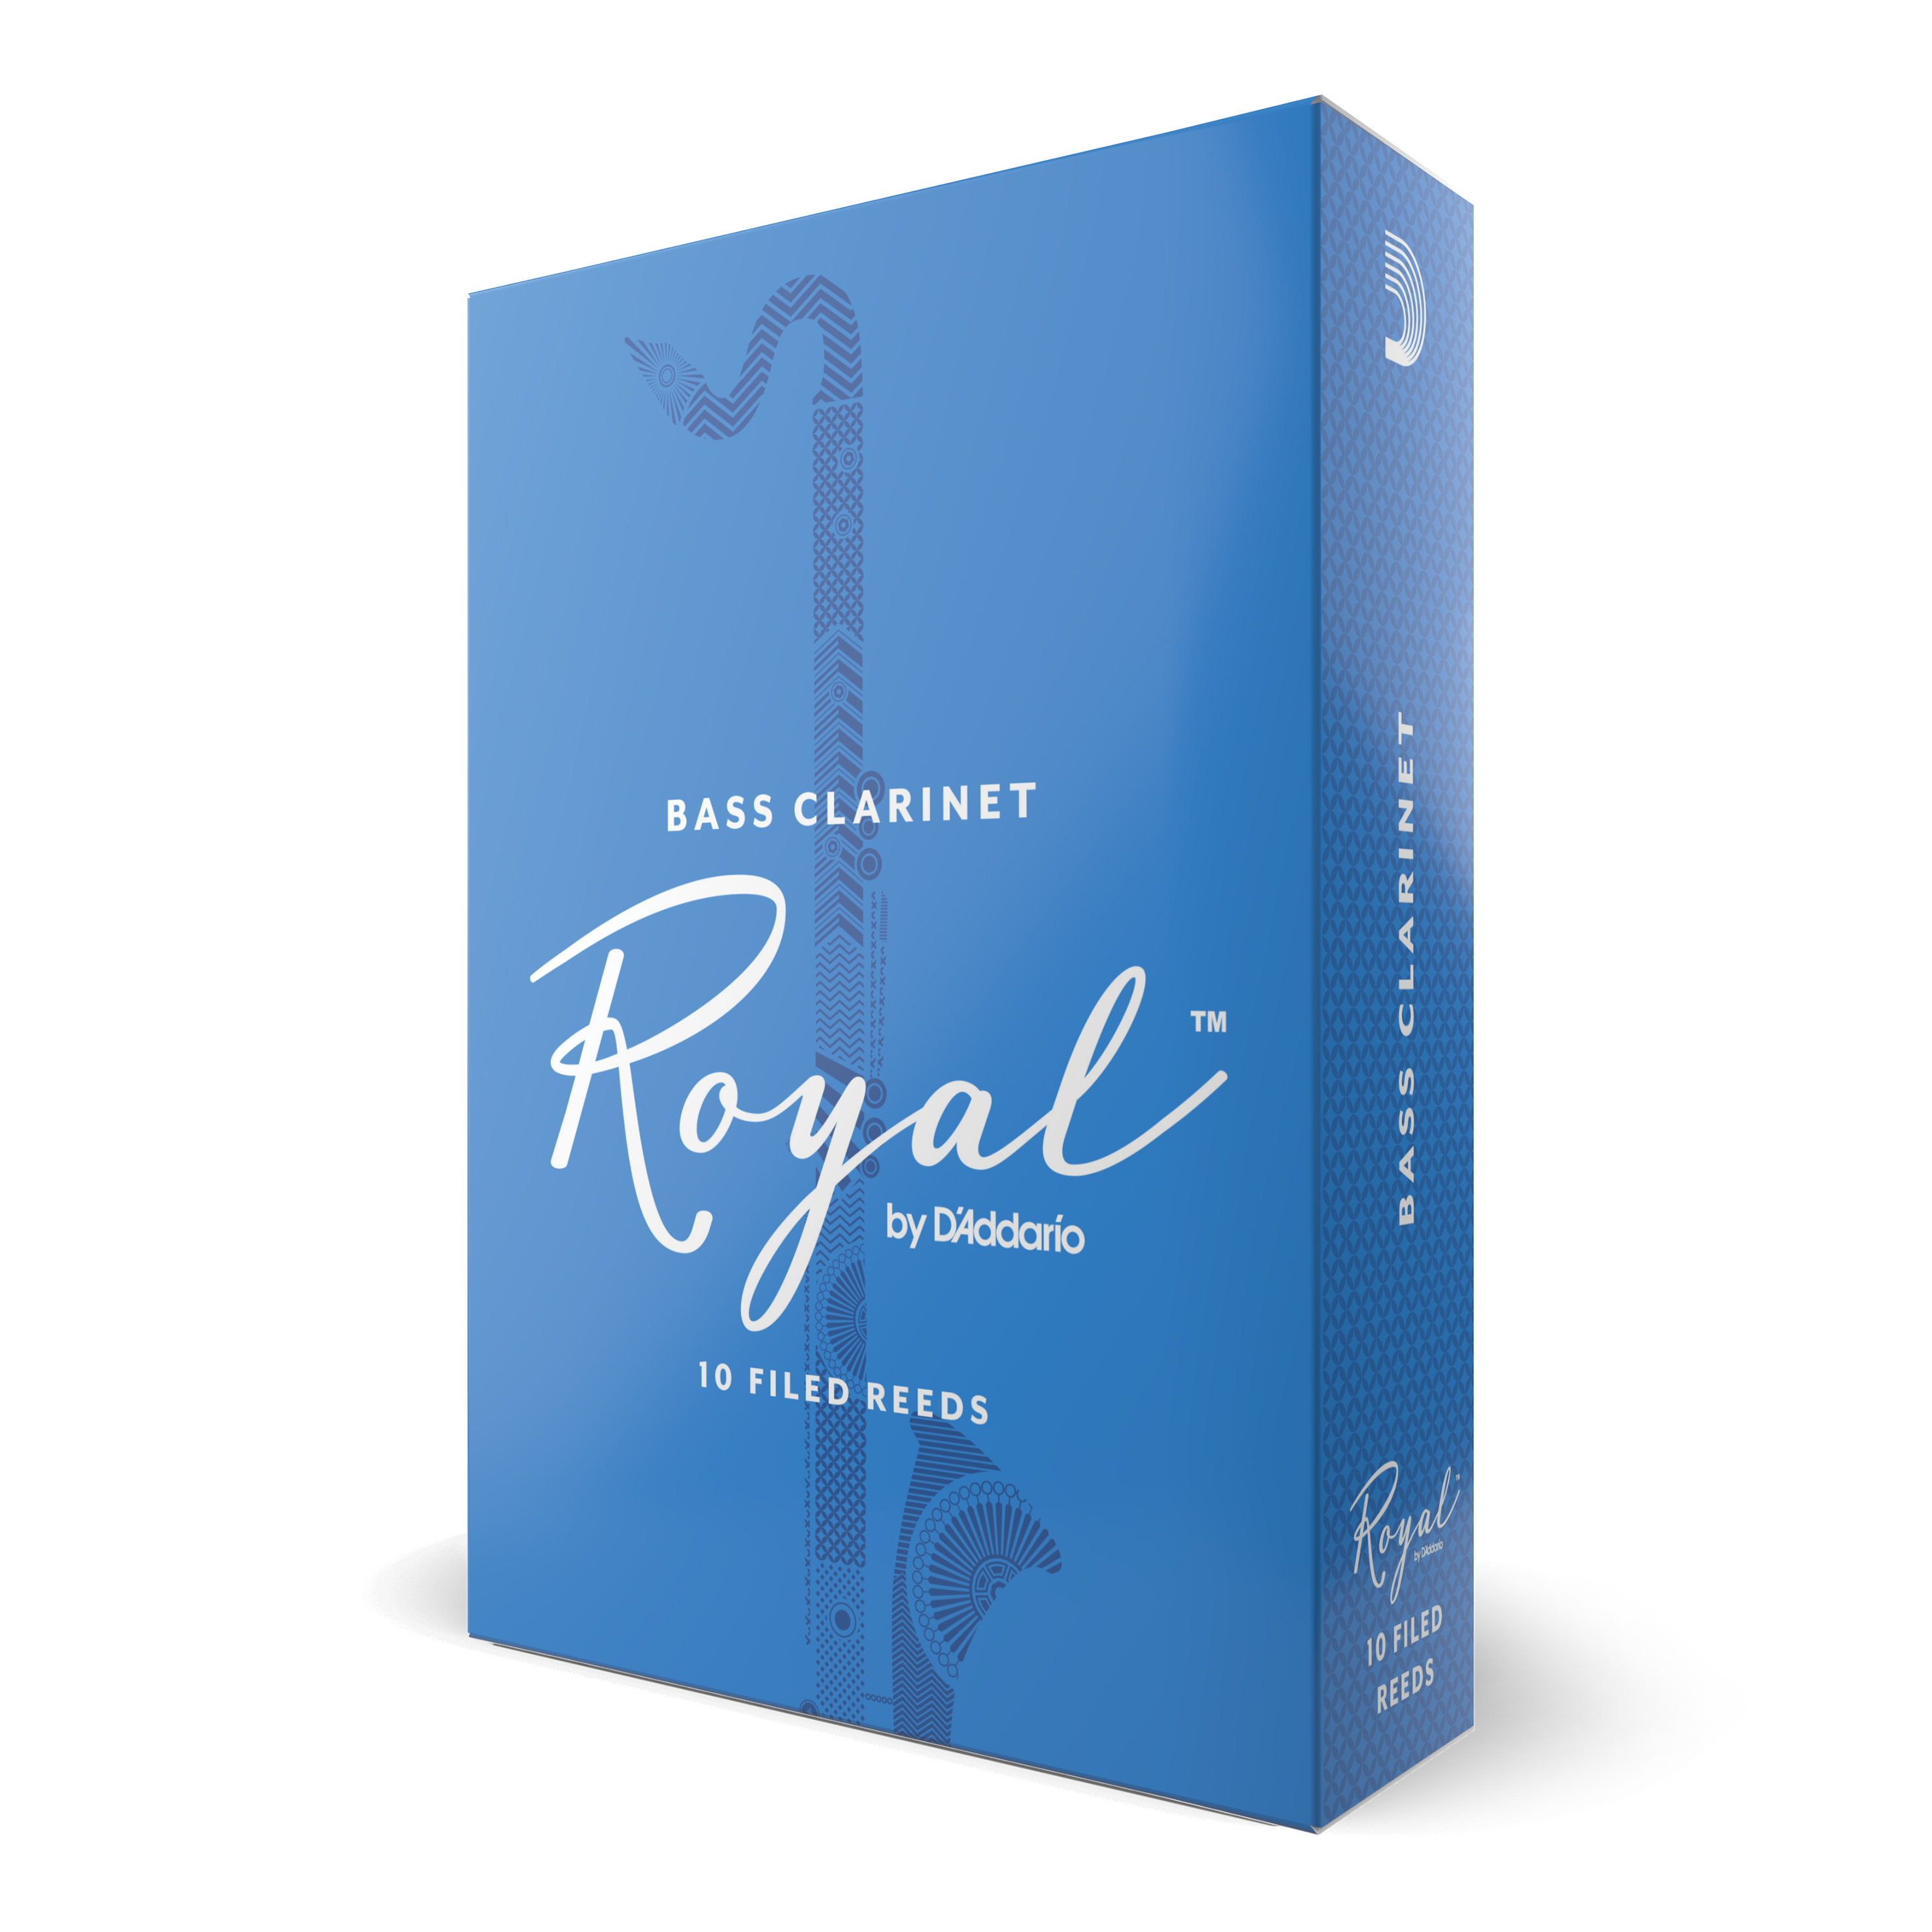 Blue Box of Ten Royal by D'addario Bass Clarinet Reeds